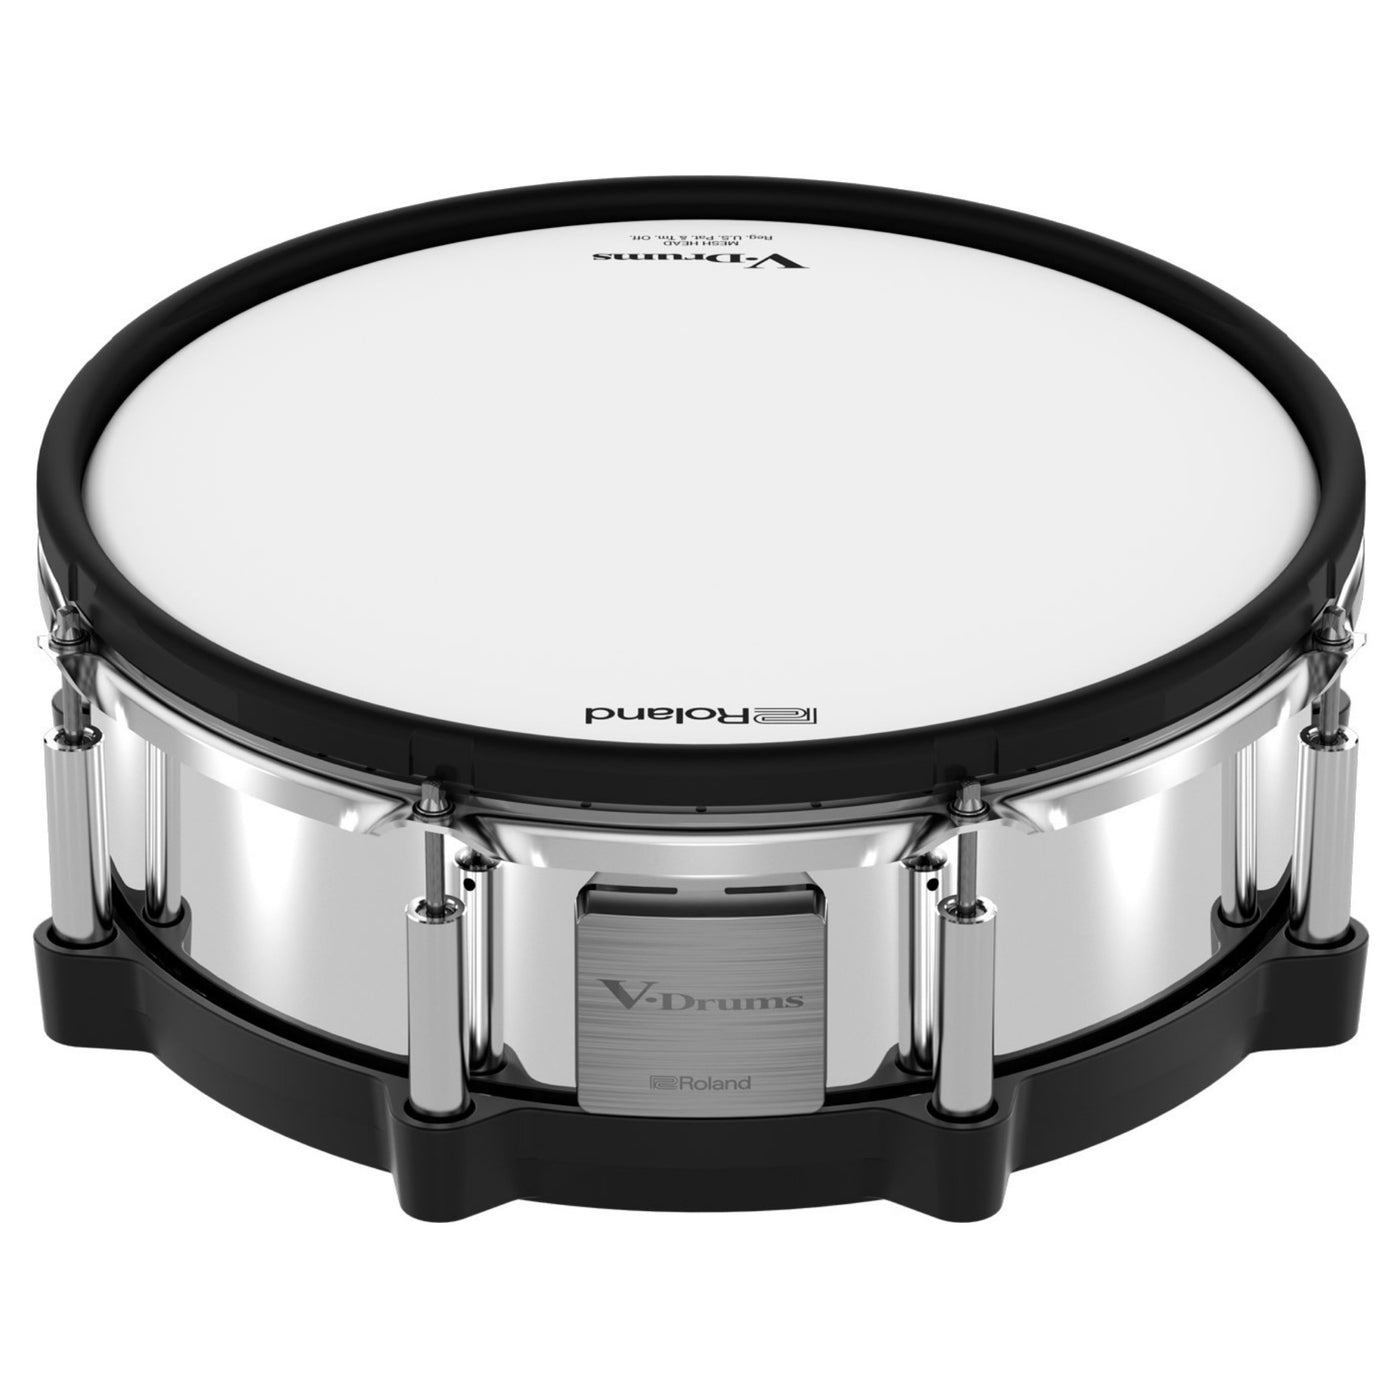 Roland TD-50DPA Module, Digital Drum & Cymbal Upgrade Pack